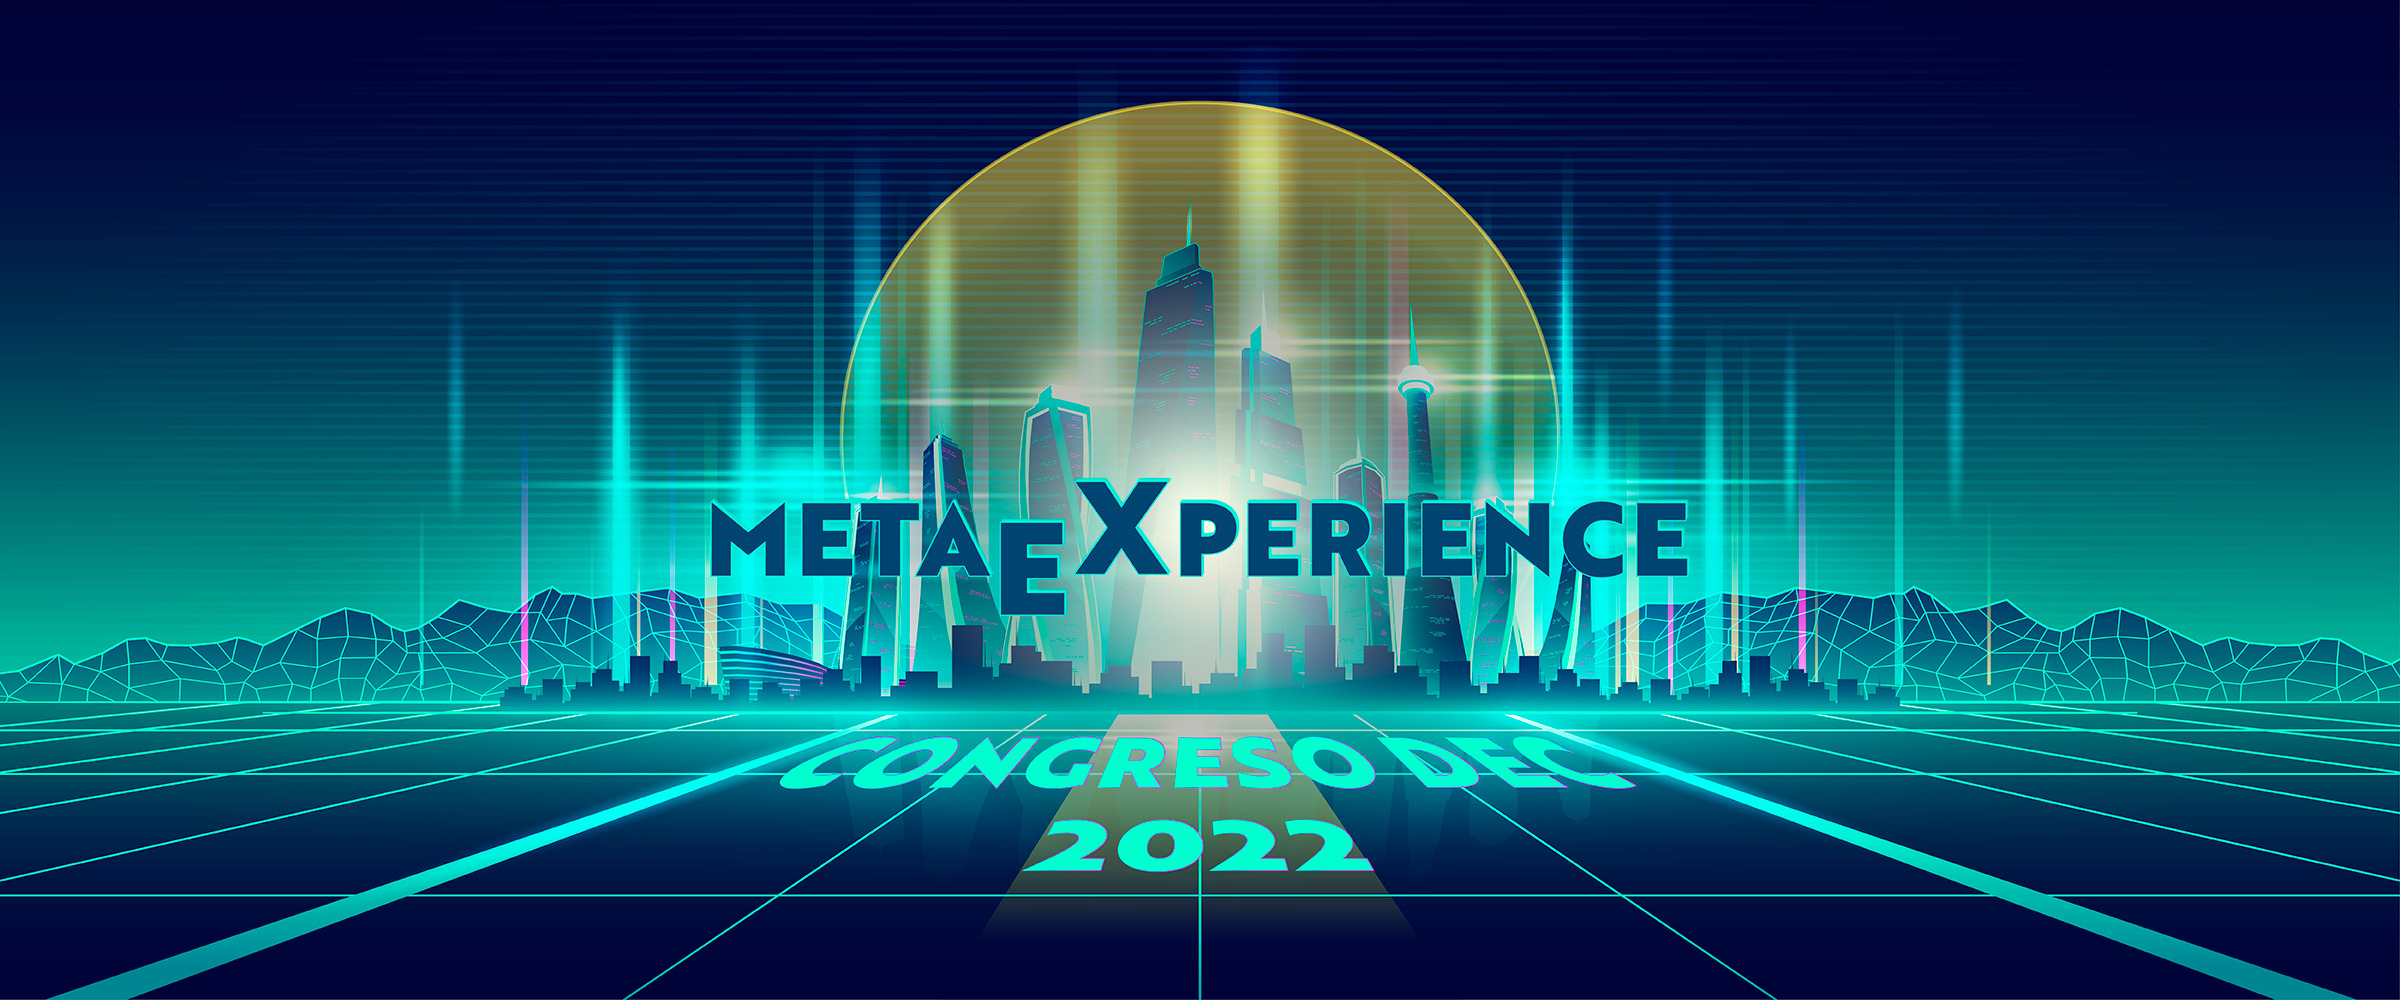 Congreso DEC 2022 Metaexperience Metaverso